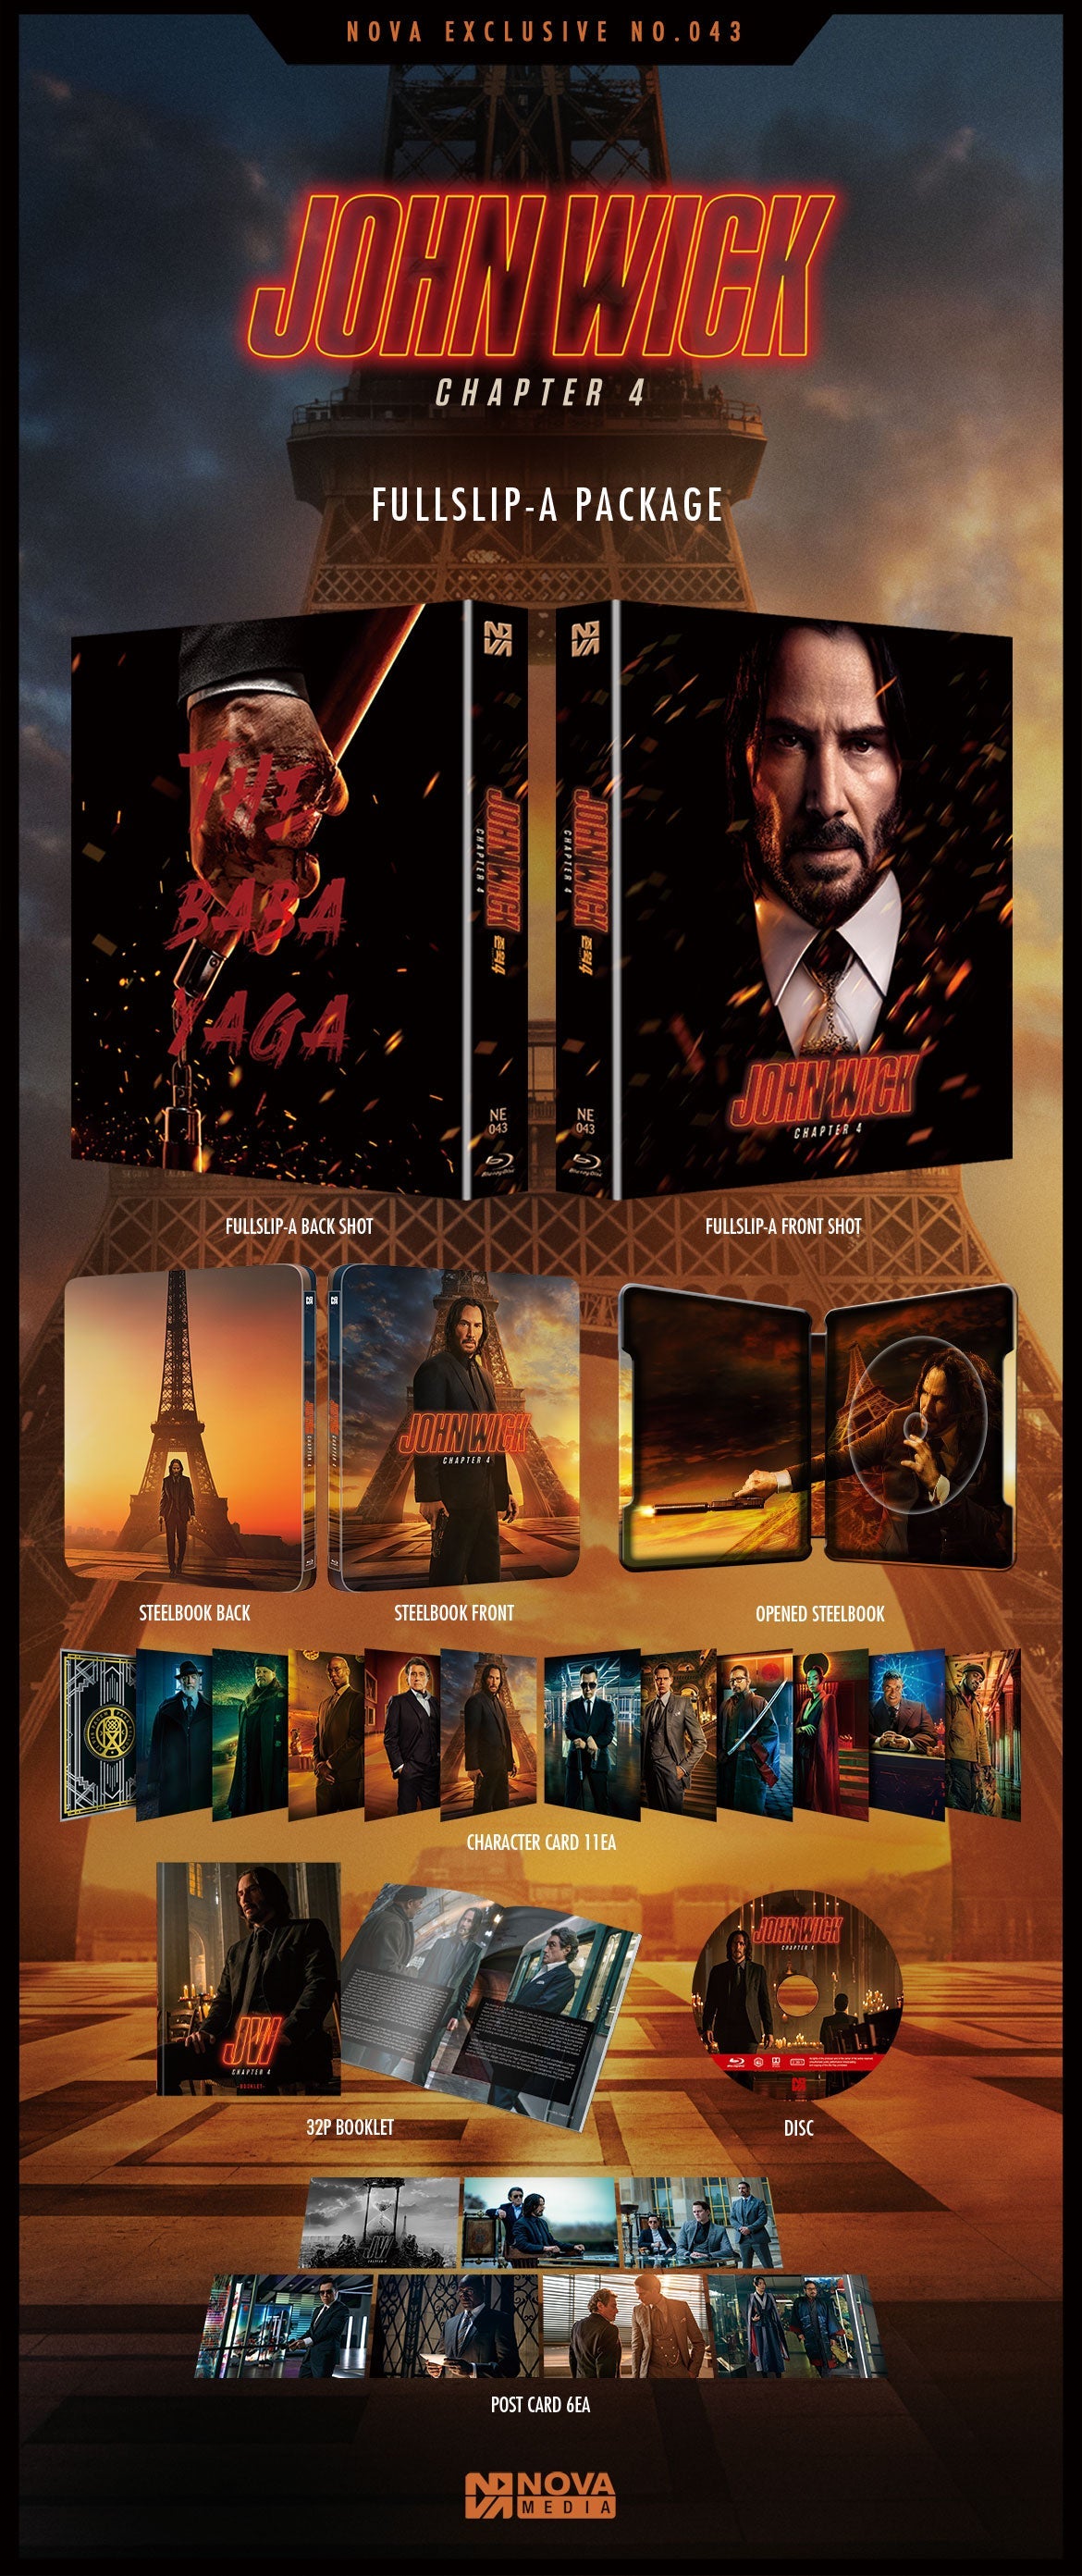 John Wick: Chapter 4 Blu-ray Steelbook NOVA MEDIA Exclusive No.43 Full Slip A